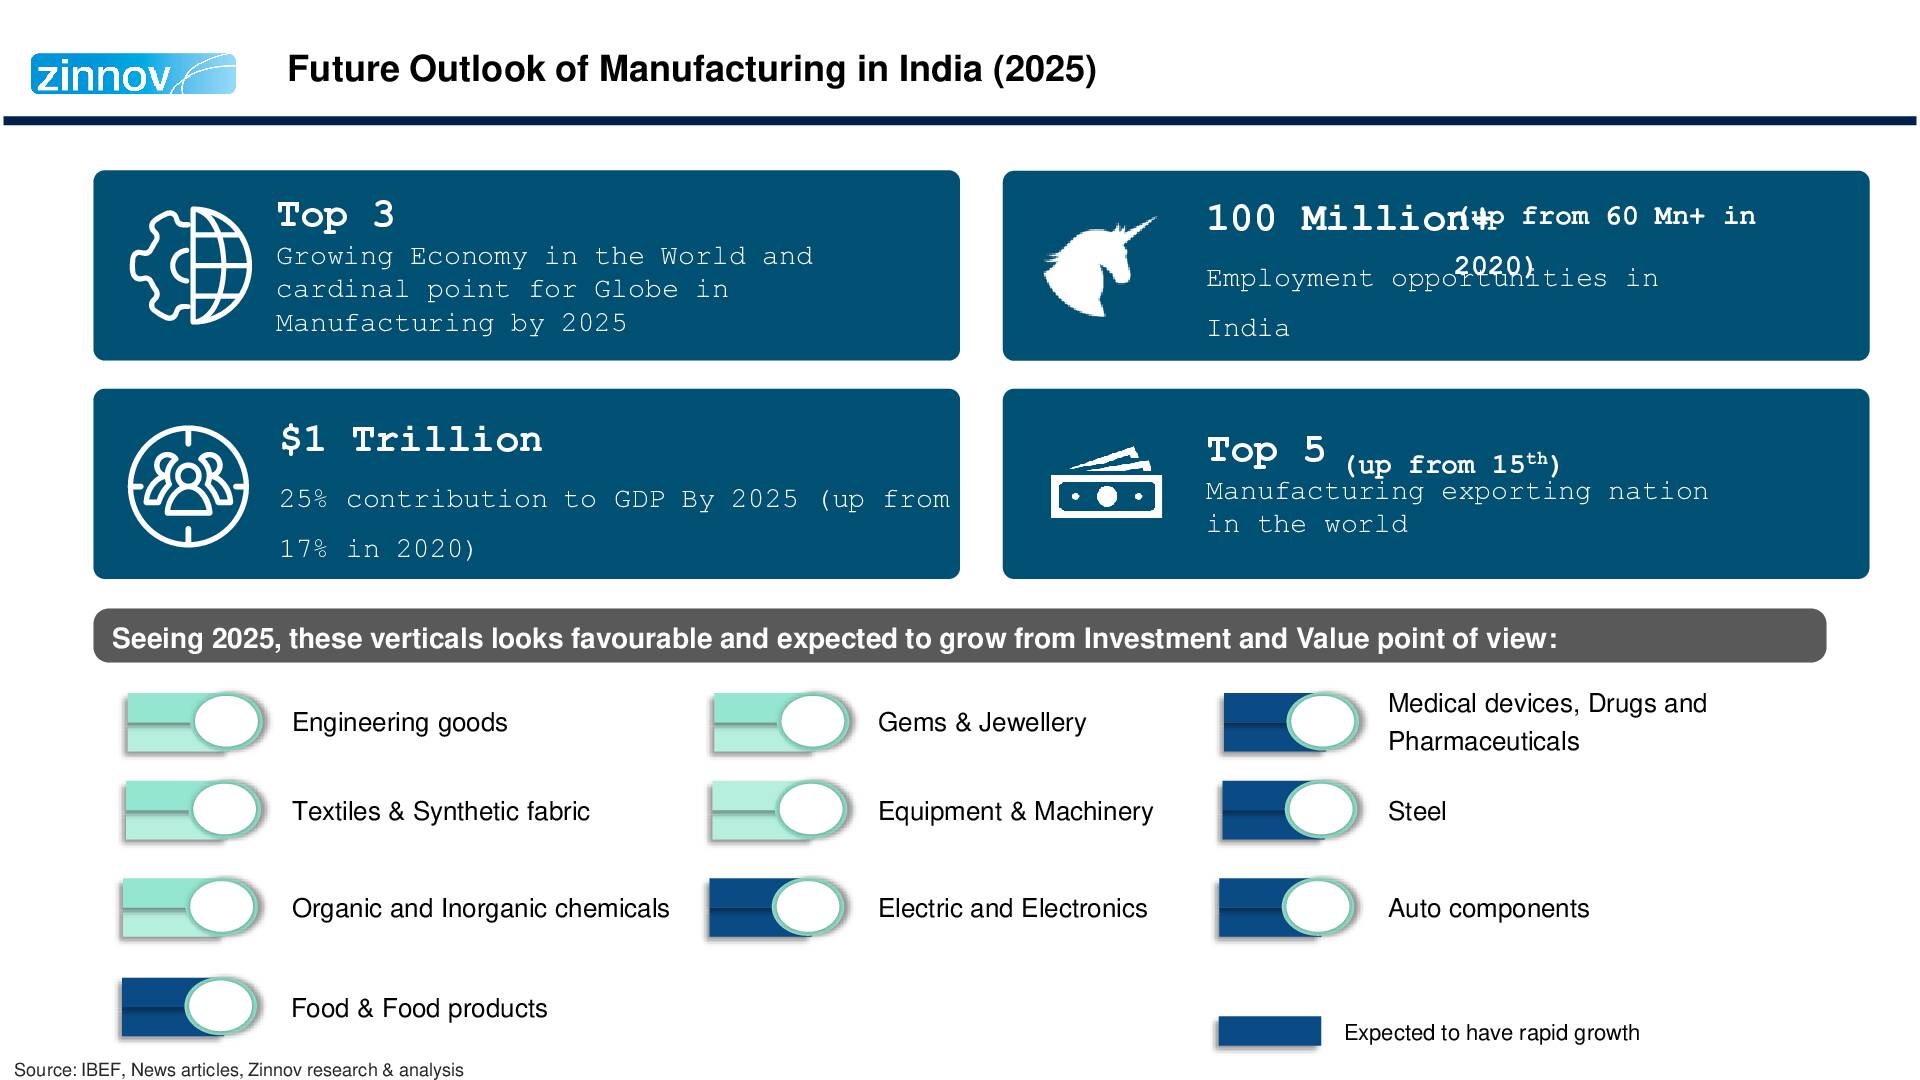 India A Preferred Manufacturing Destination27